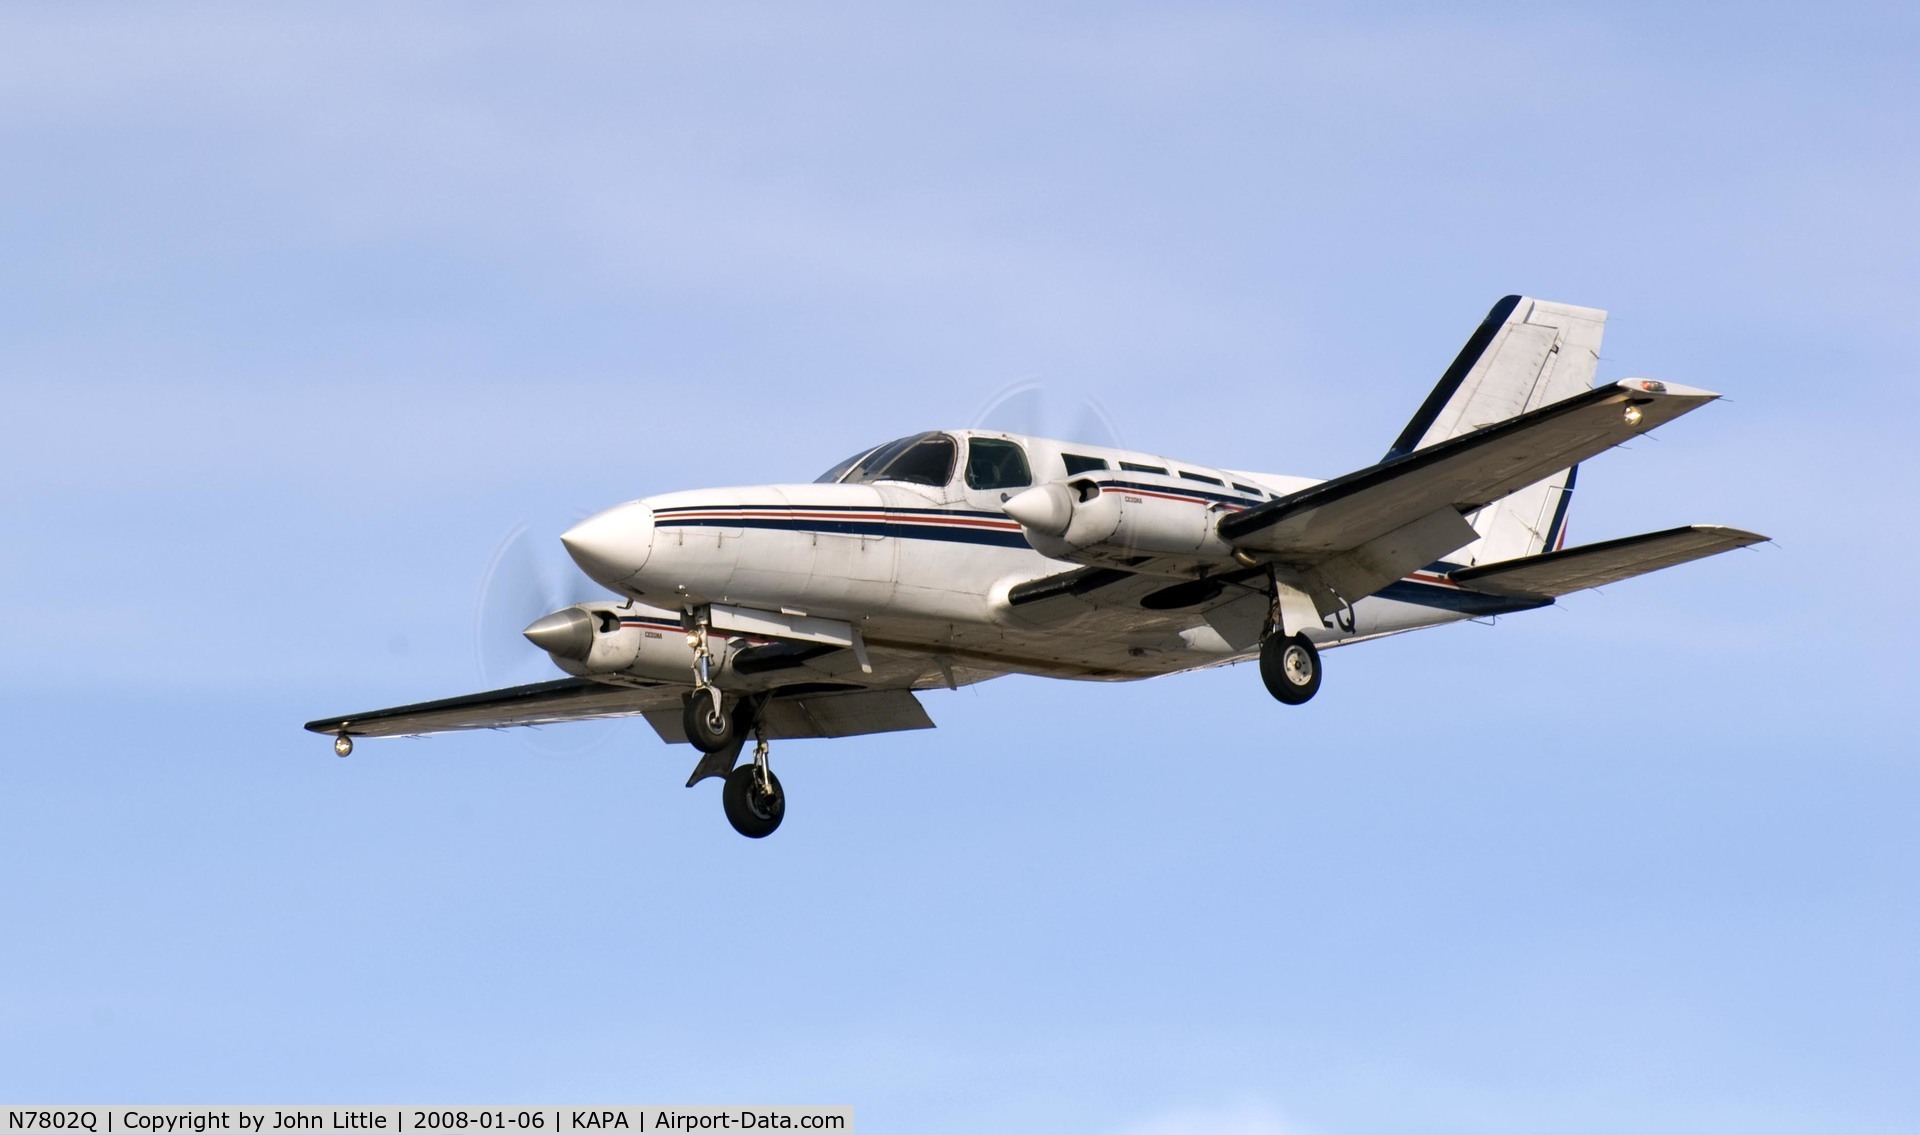 N7802Q, 1980 Cessna 402C C/N 402C0355, Approach to 17L